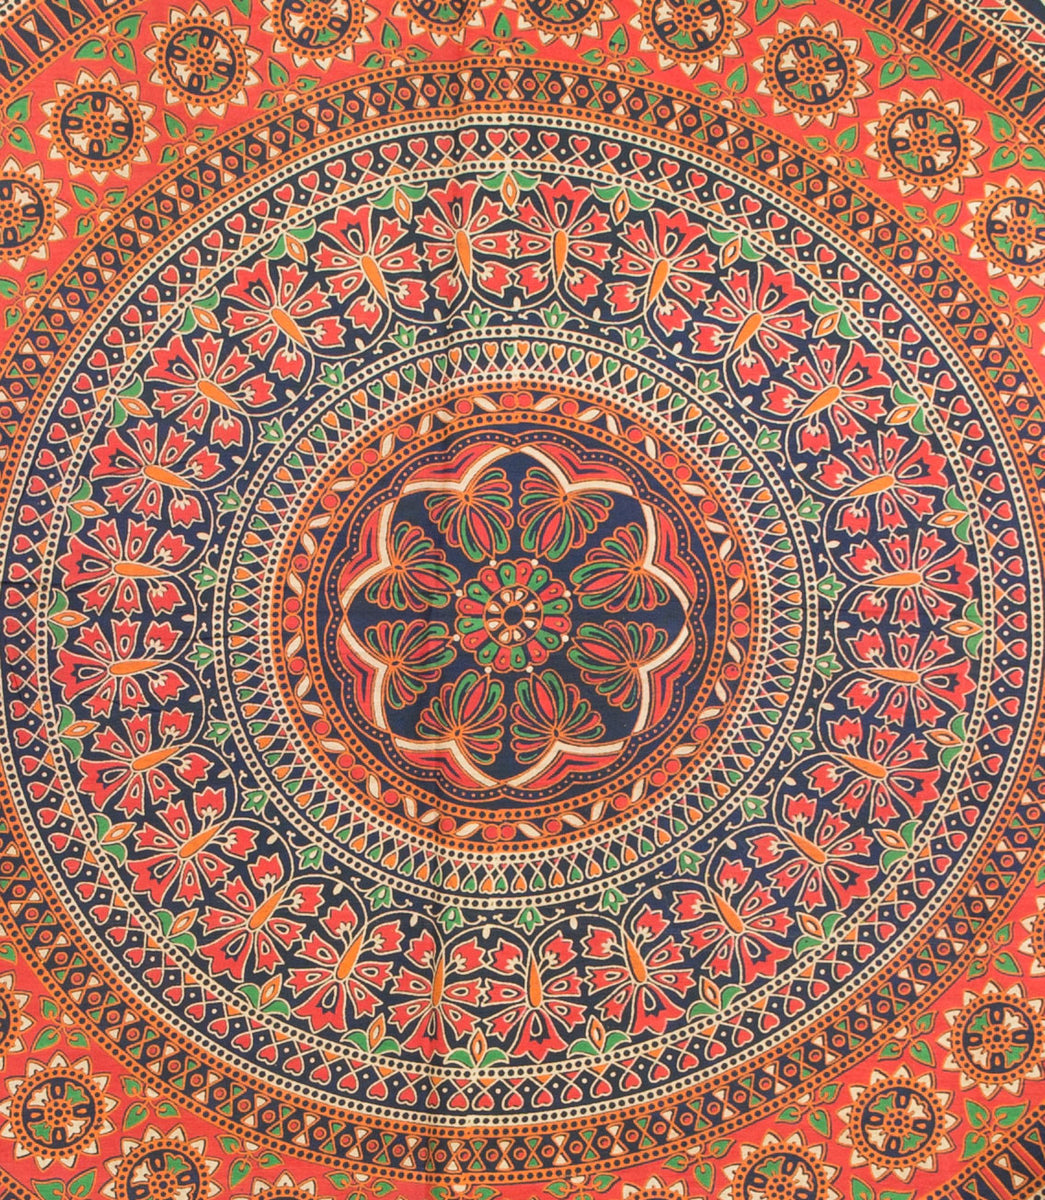 Blue and orange Mandala tapestry | Nuichan